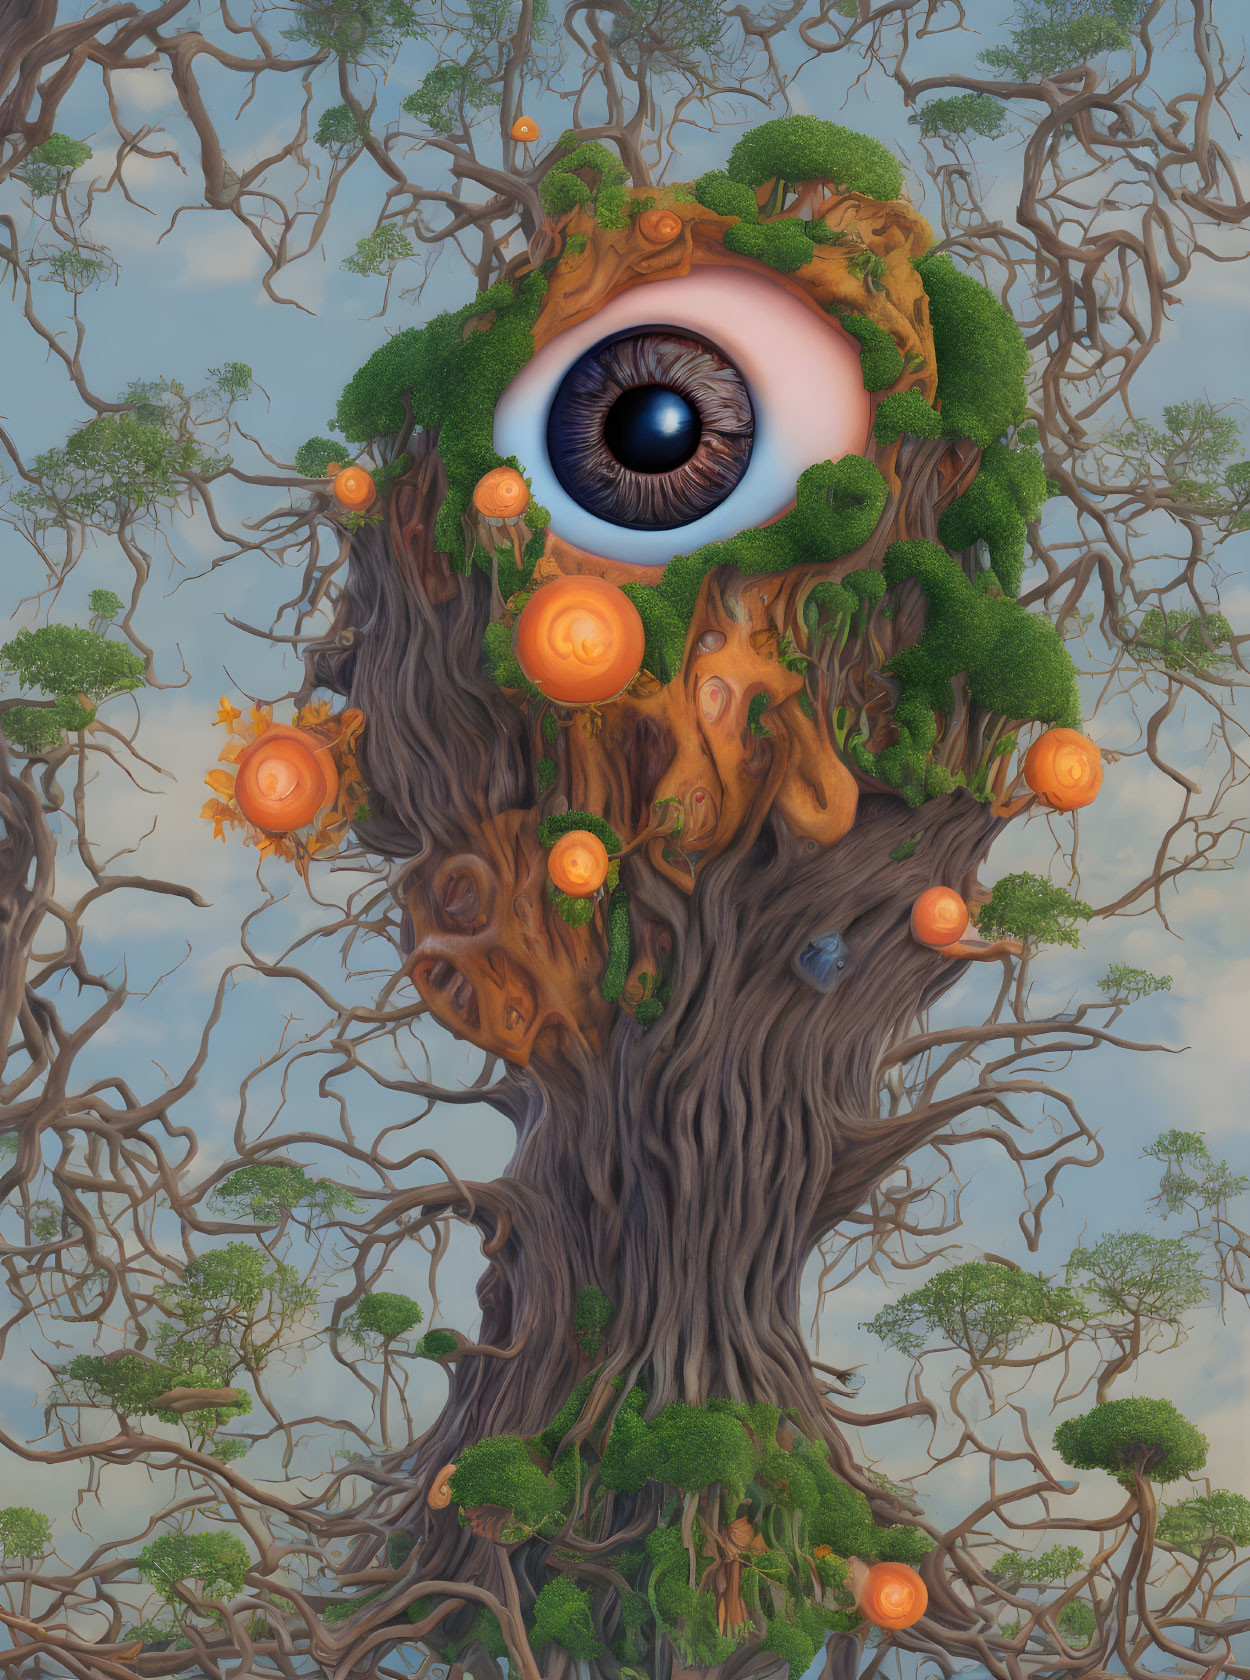 Surreal artwork: Ancient tree transforms into giant human eye